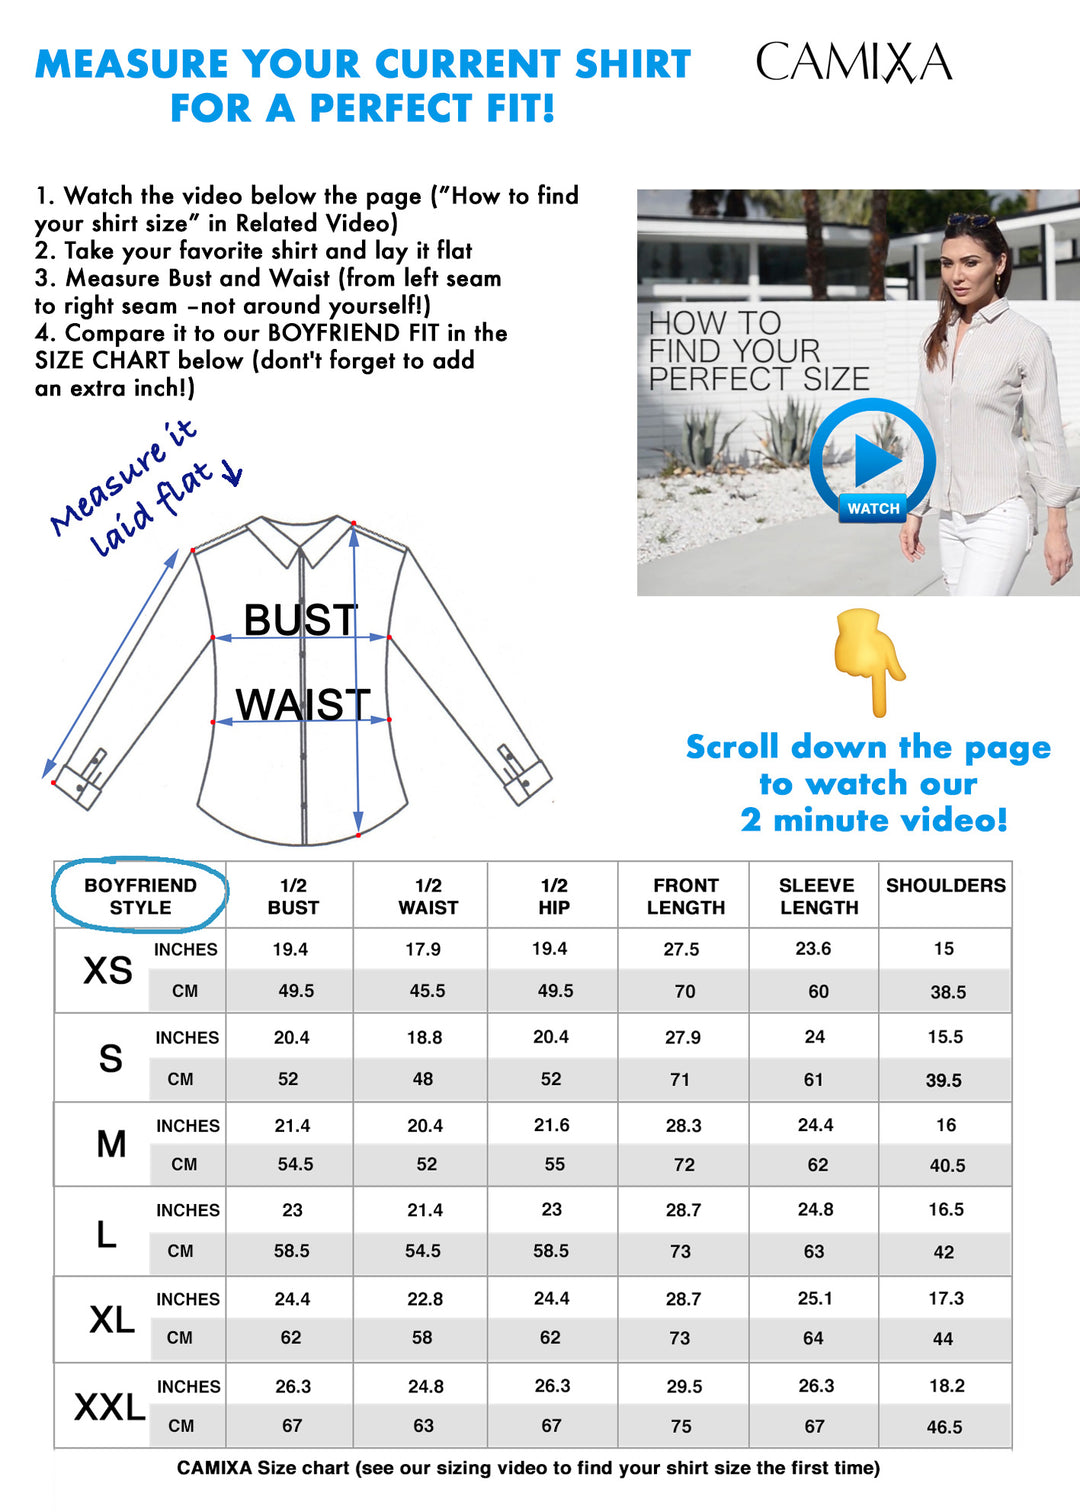 Febe Short Sleeve White, Casual Linen Camp Shirt